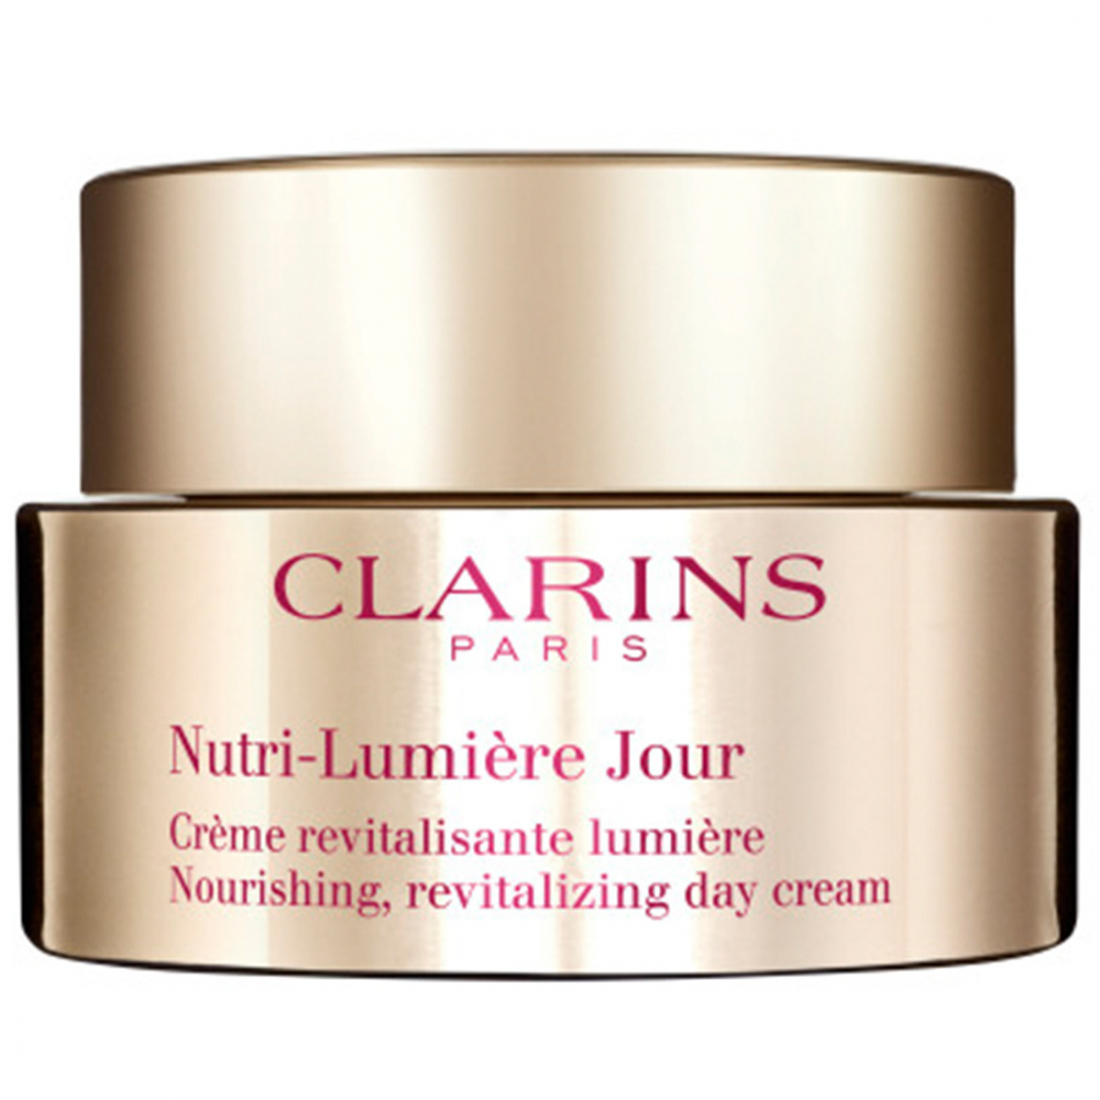 'Nutri-Lumière Jour' Day Cream - 50 ml